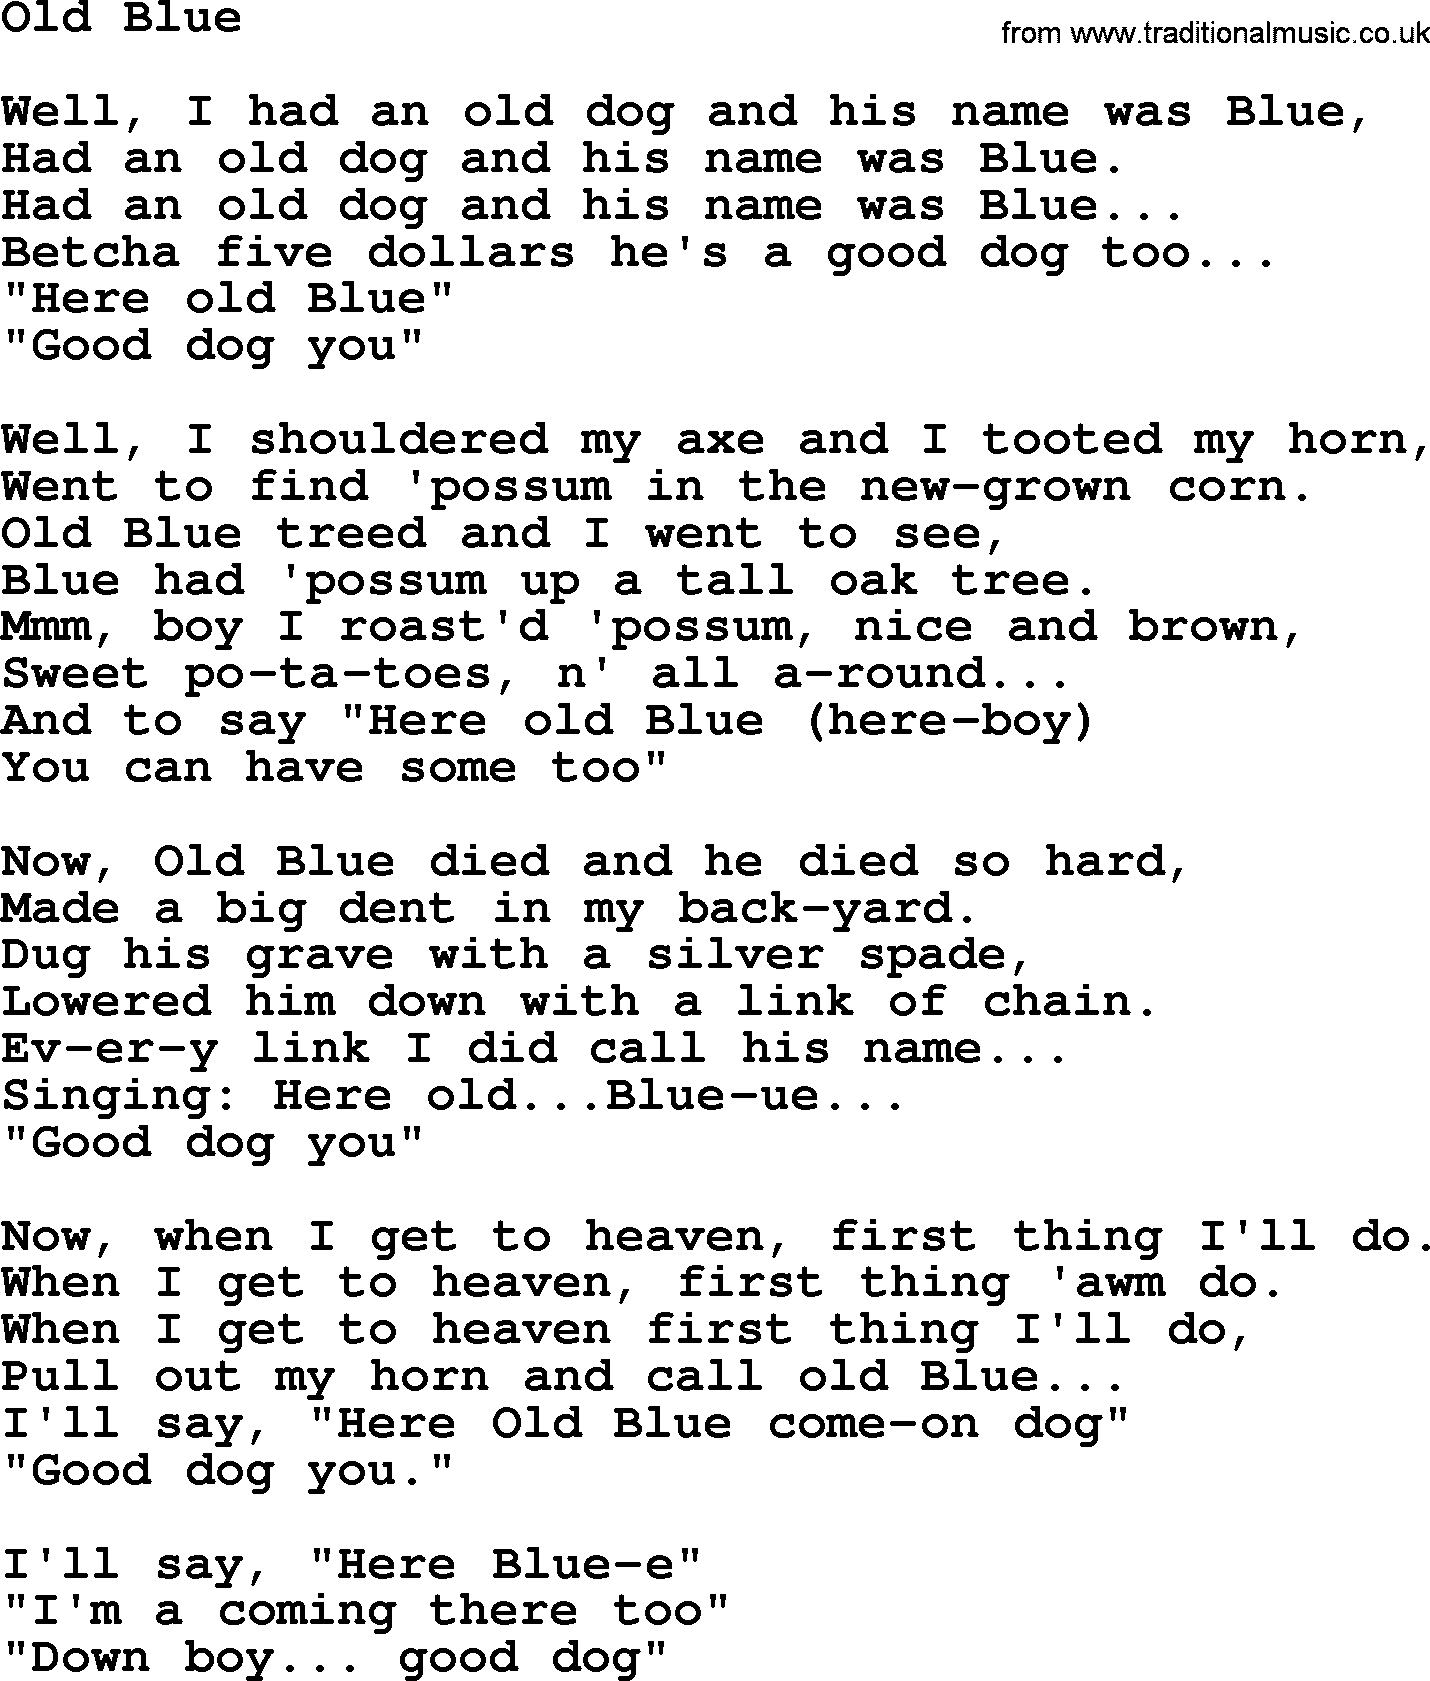 Joan Baez song Old Blue, lyrics